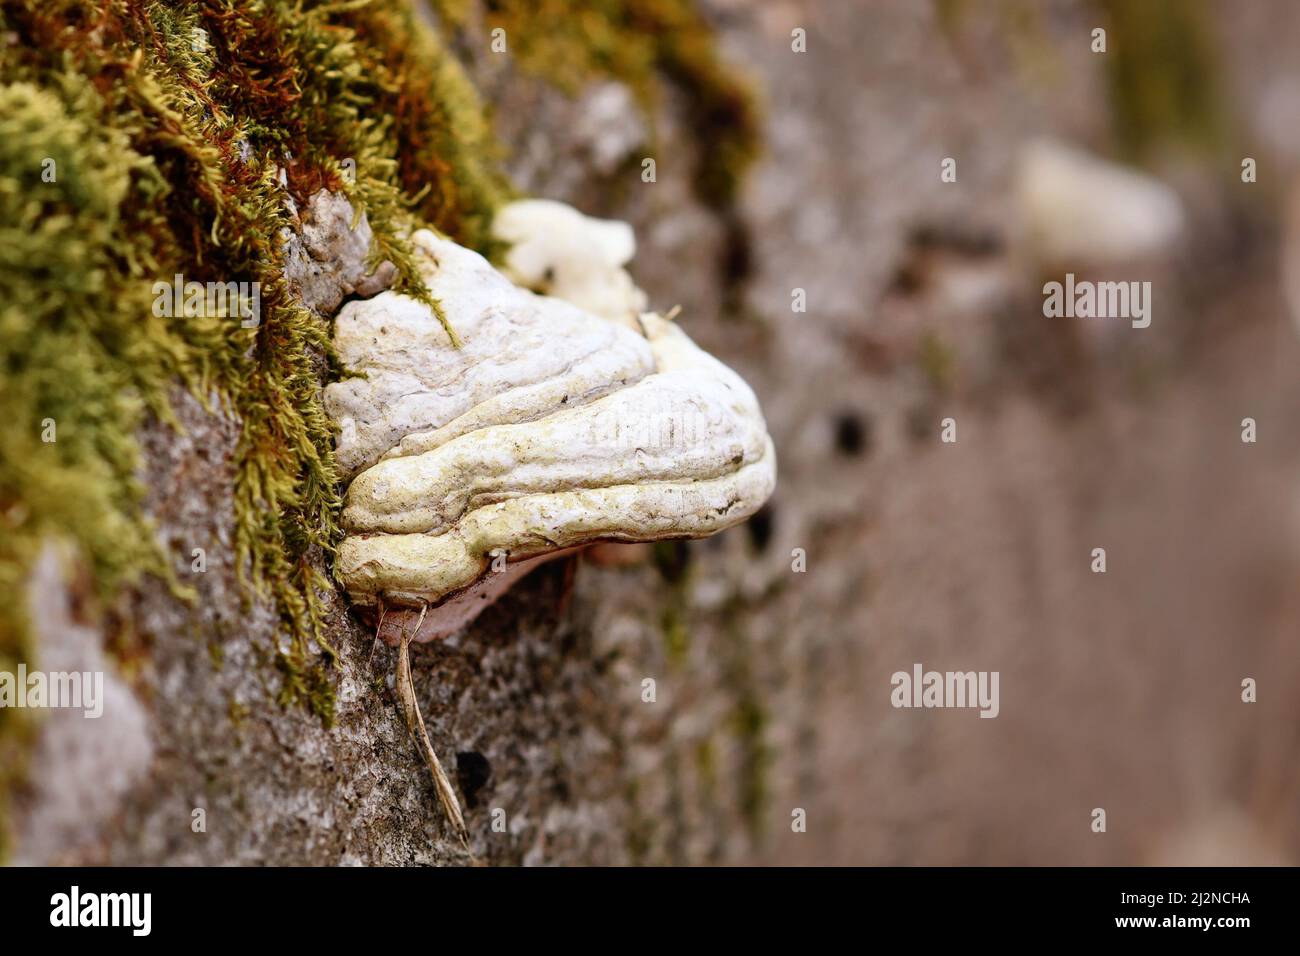 Tinder fungus 'Fomes fomentarius' growing on dead tree Stock Photo